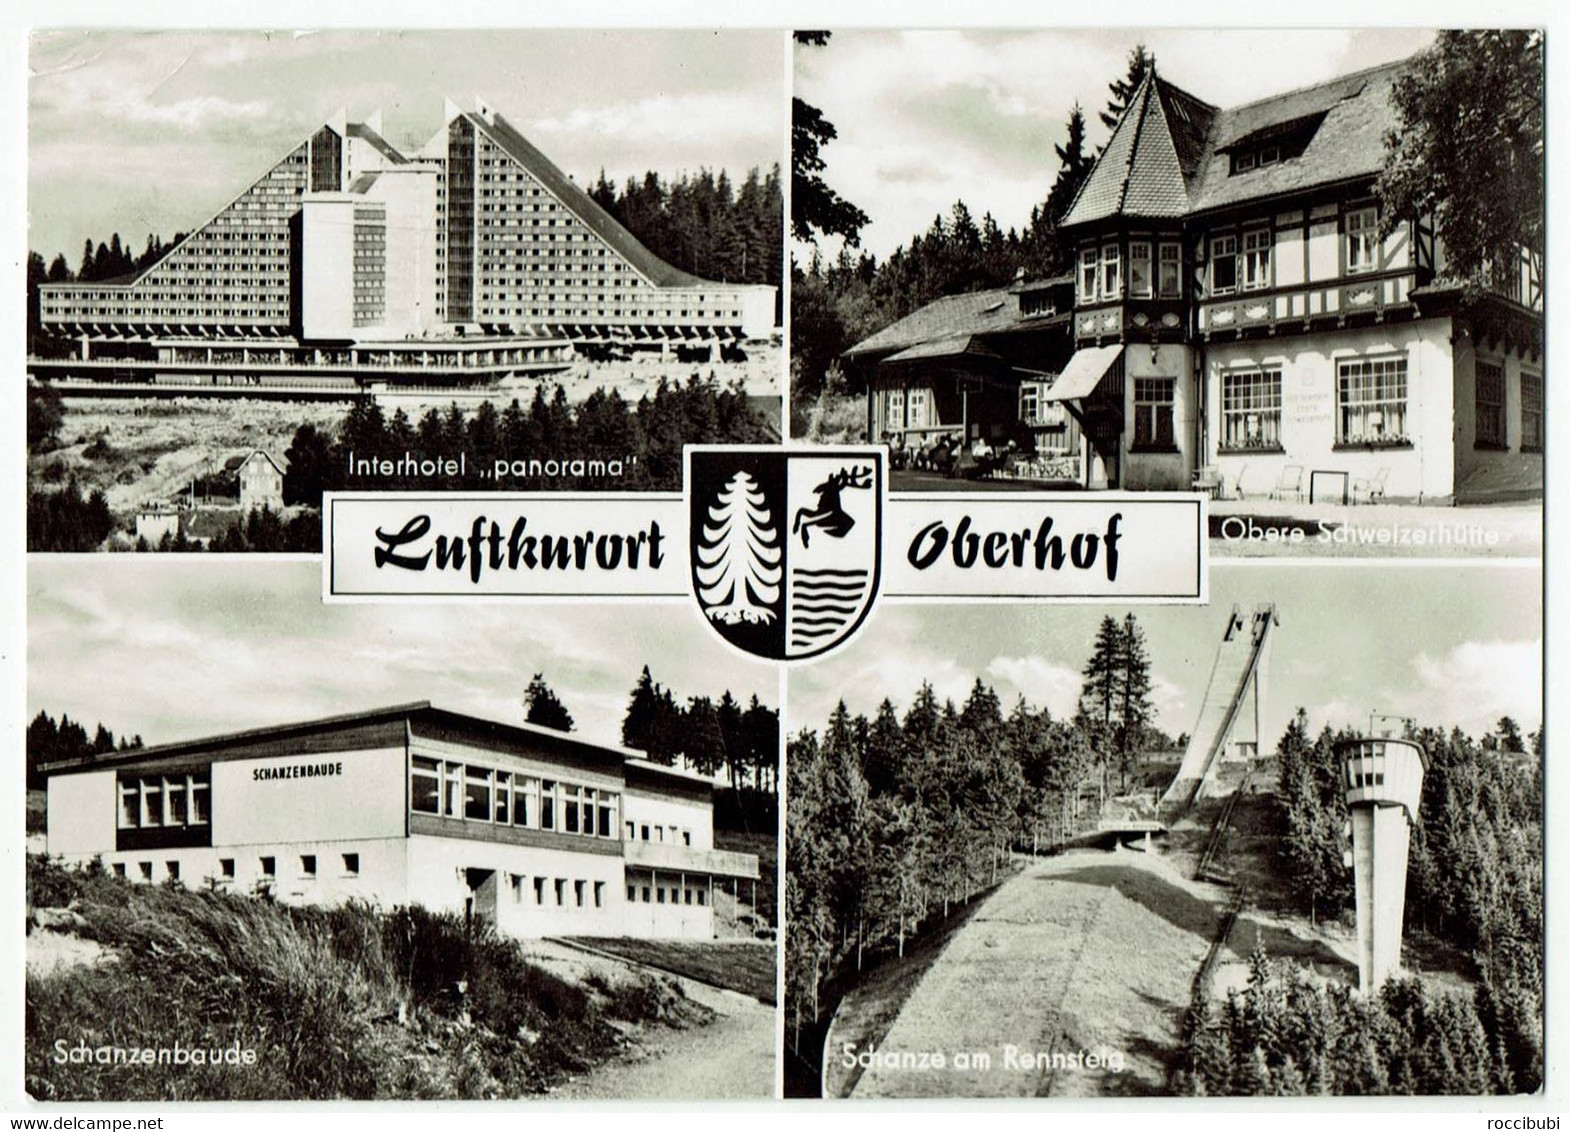 Oberhof - Oberhof